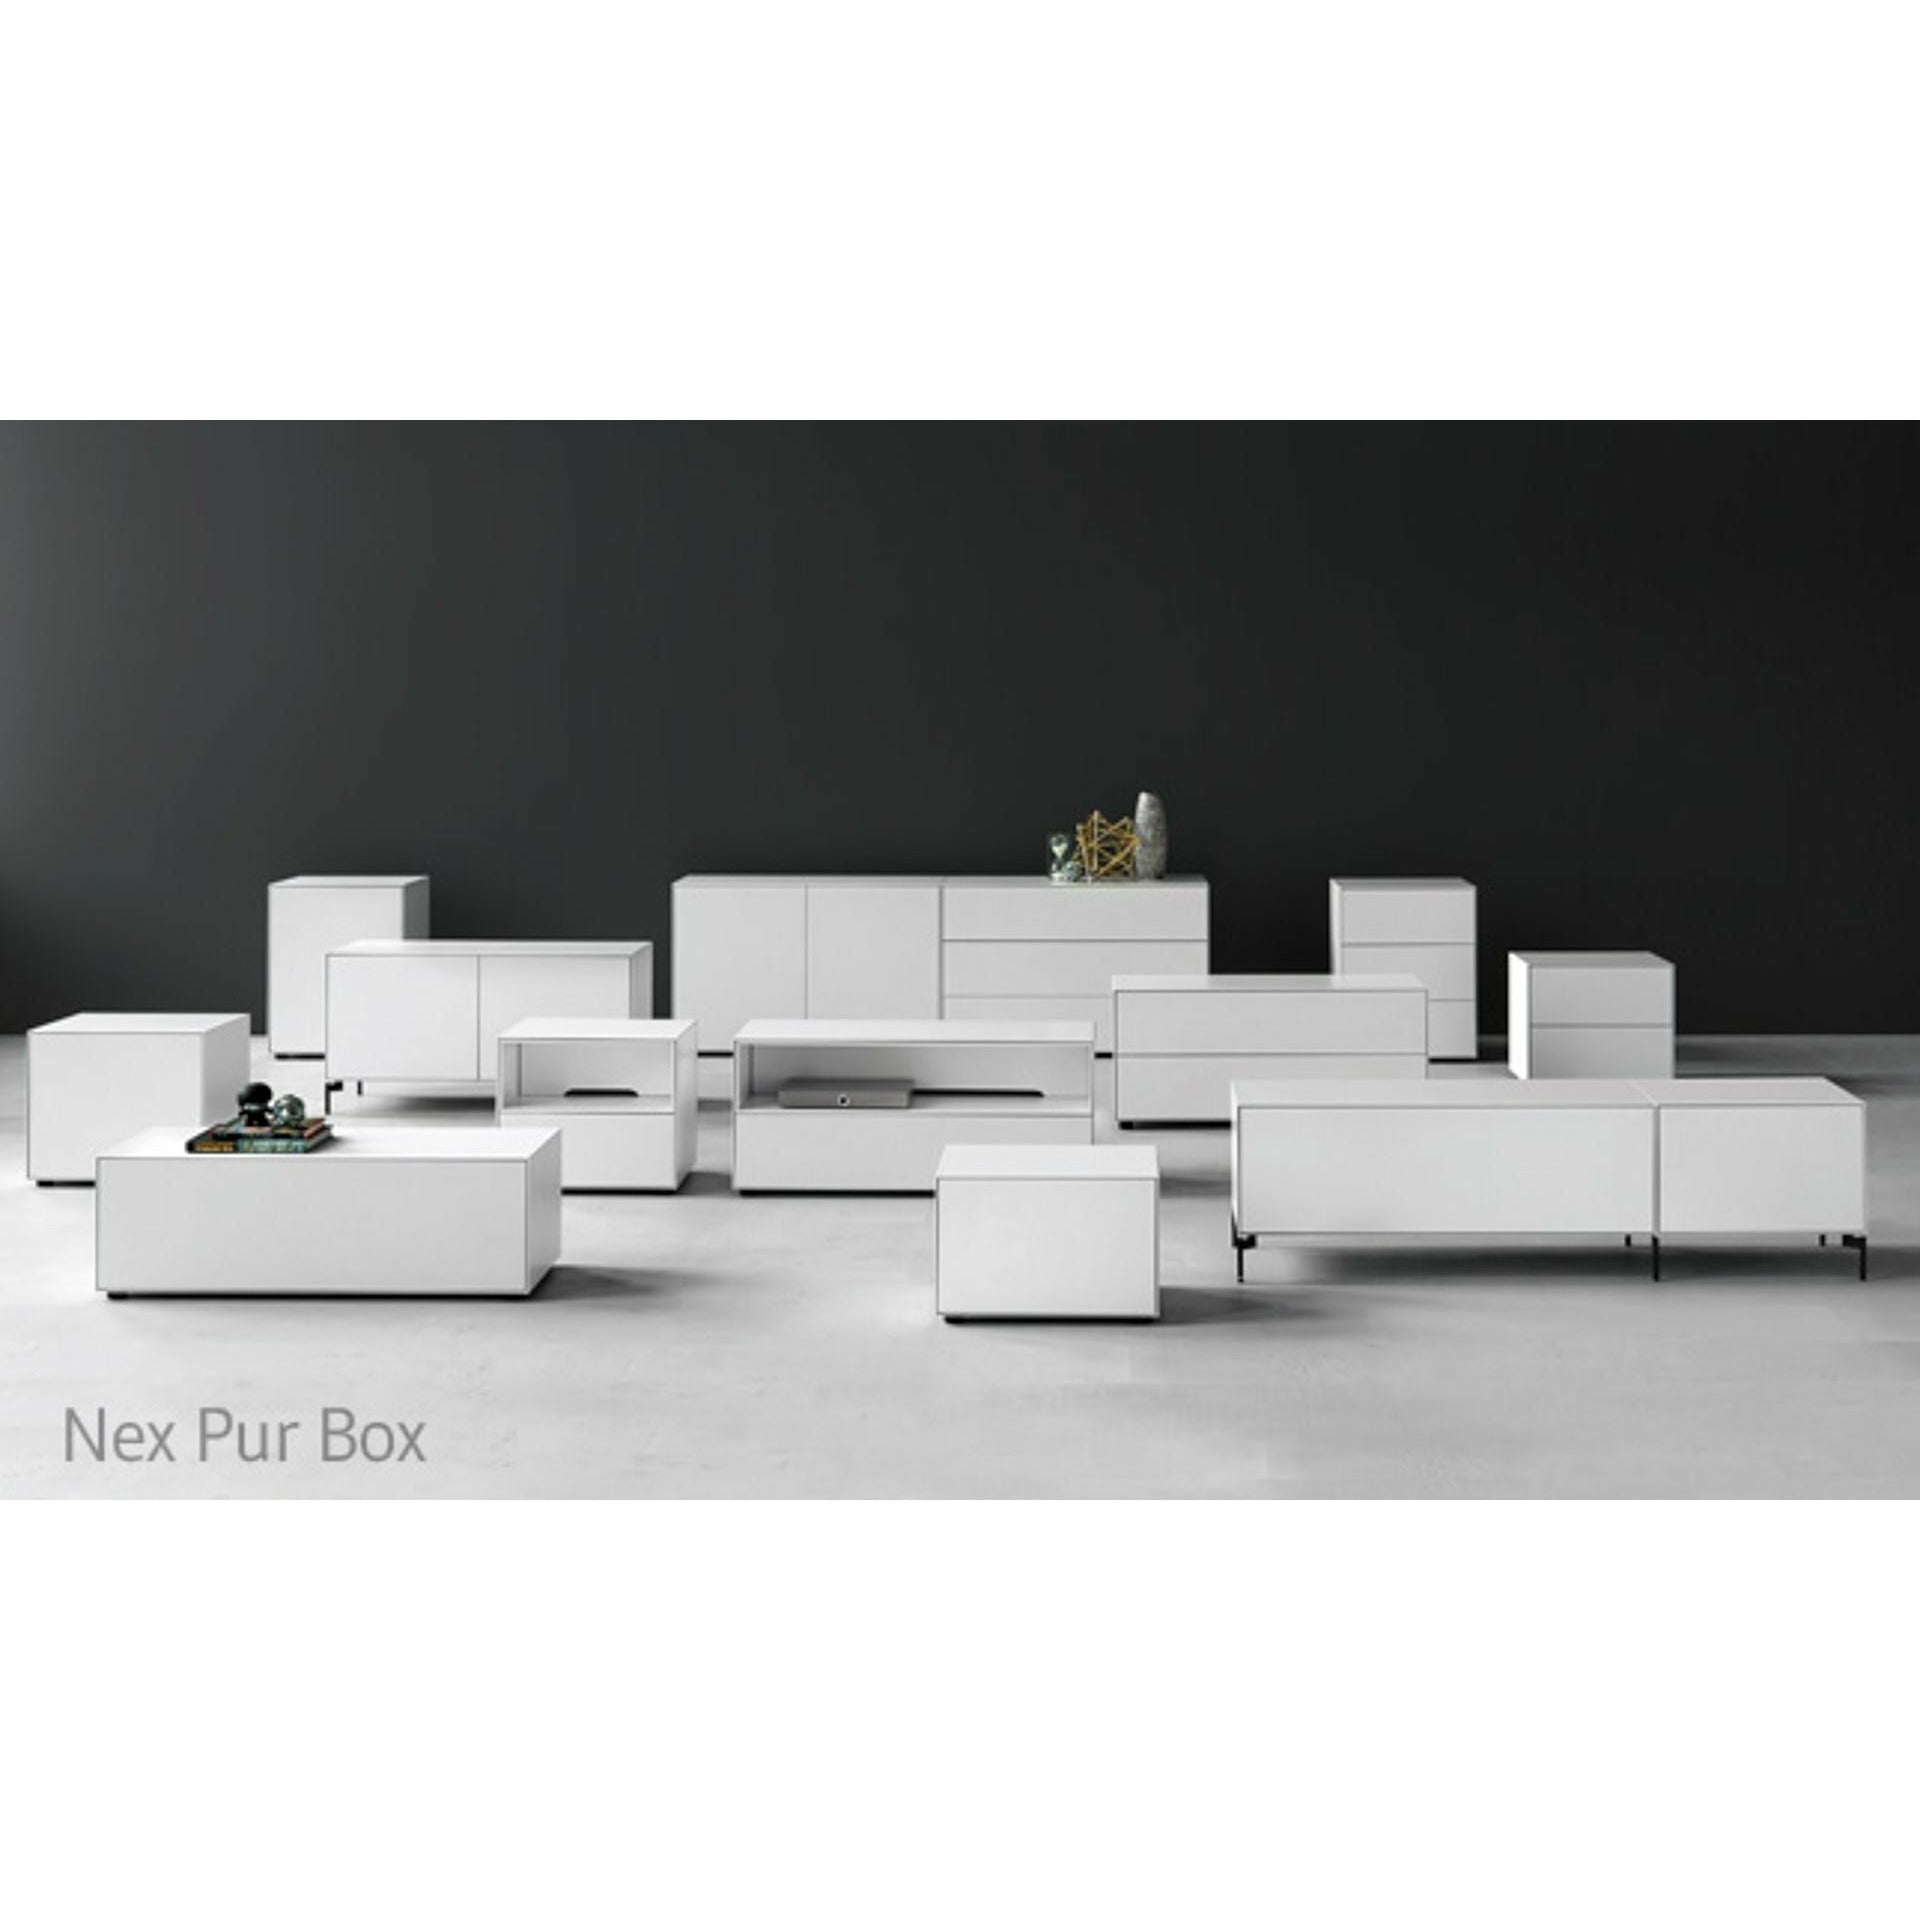 Piure NEX PUR BOX MEDIA FLAP HX W 37,5x120 cm, 1 étagère